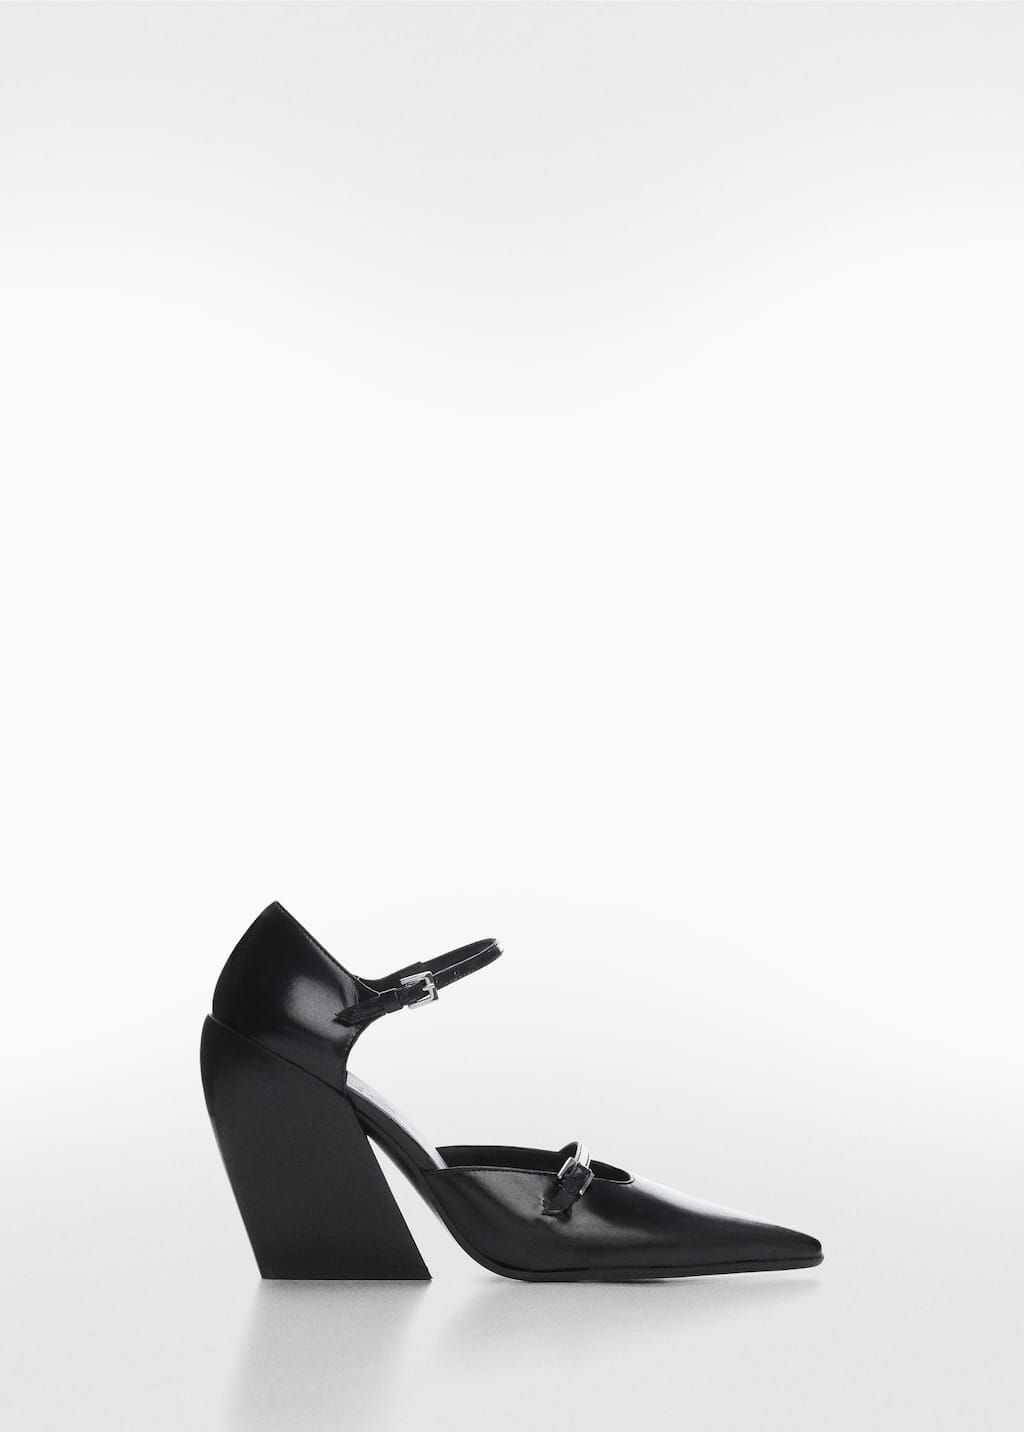 Black block-heeled shoes by Mango